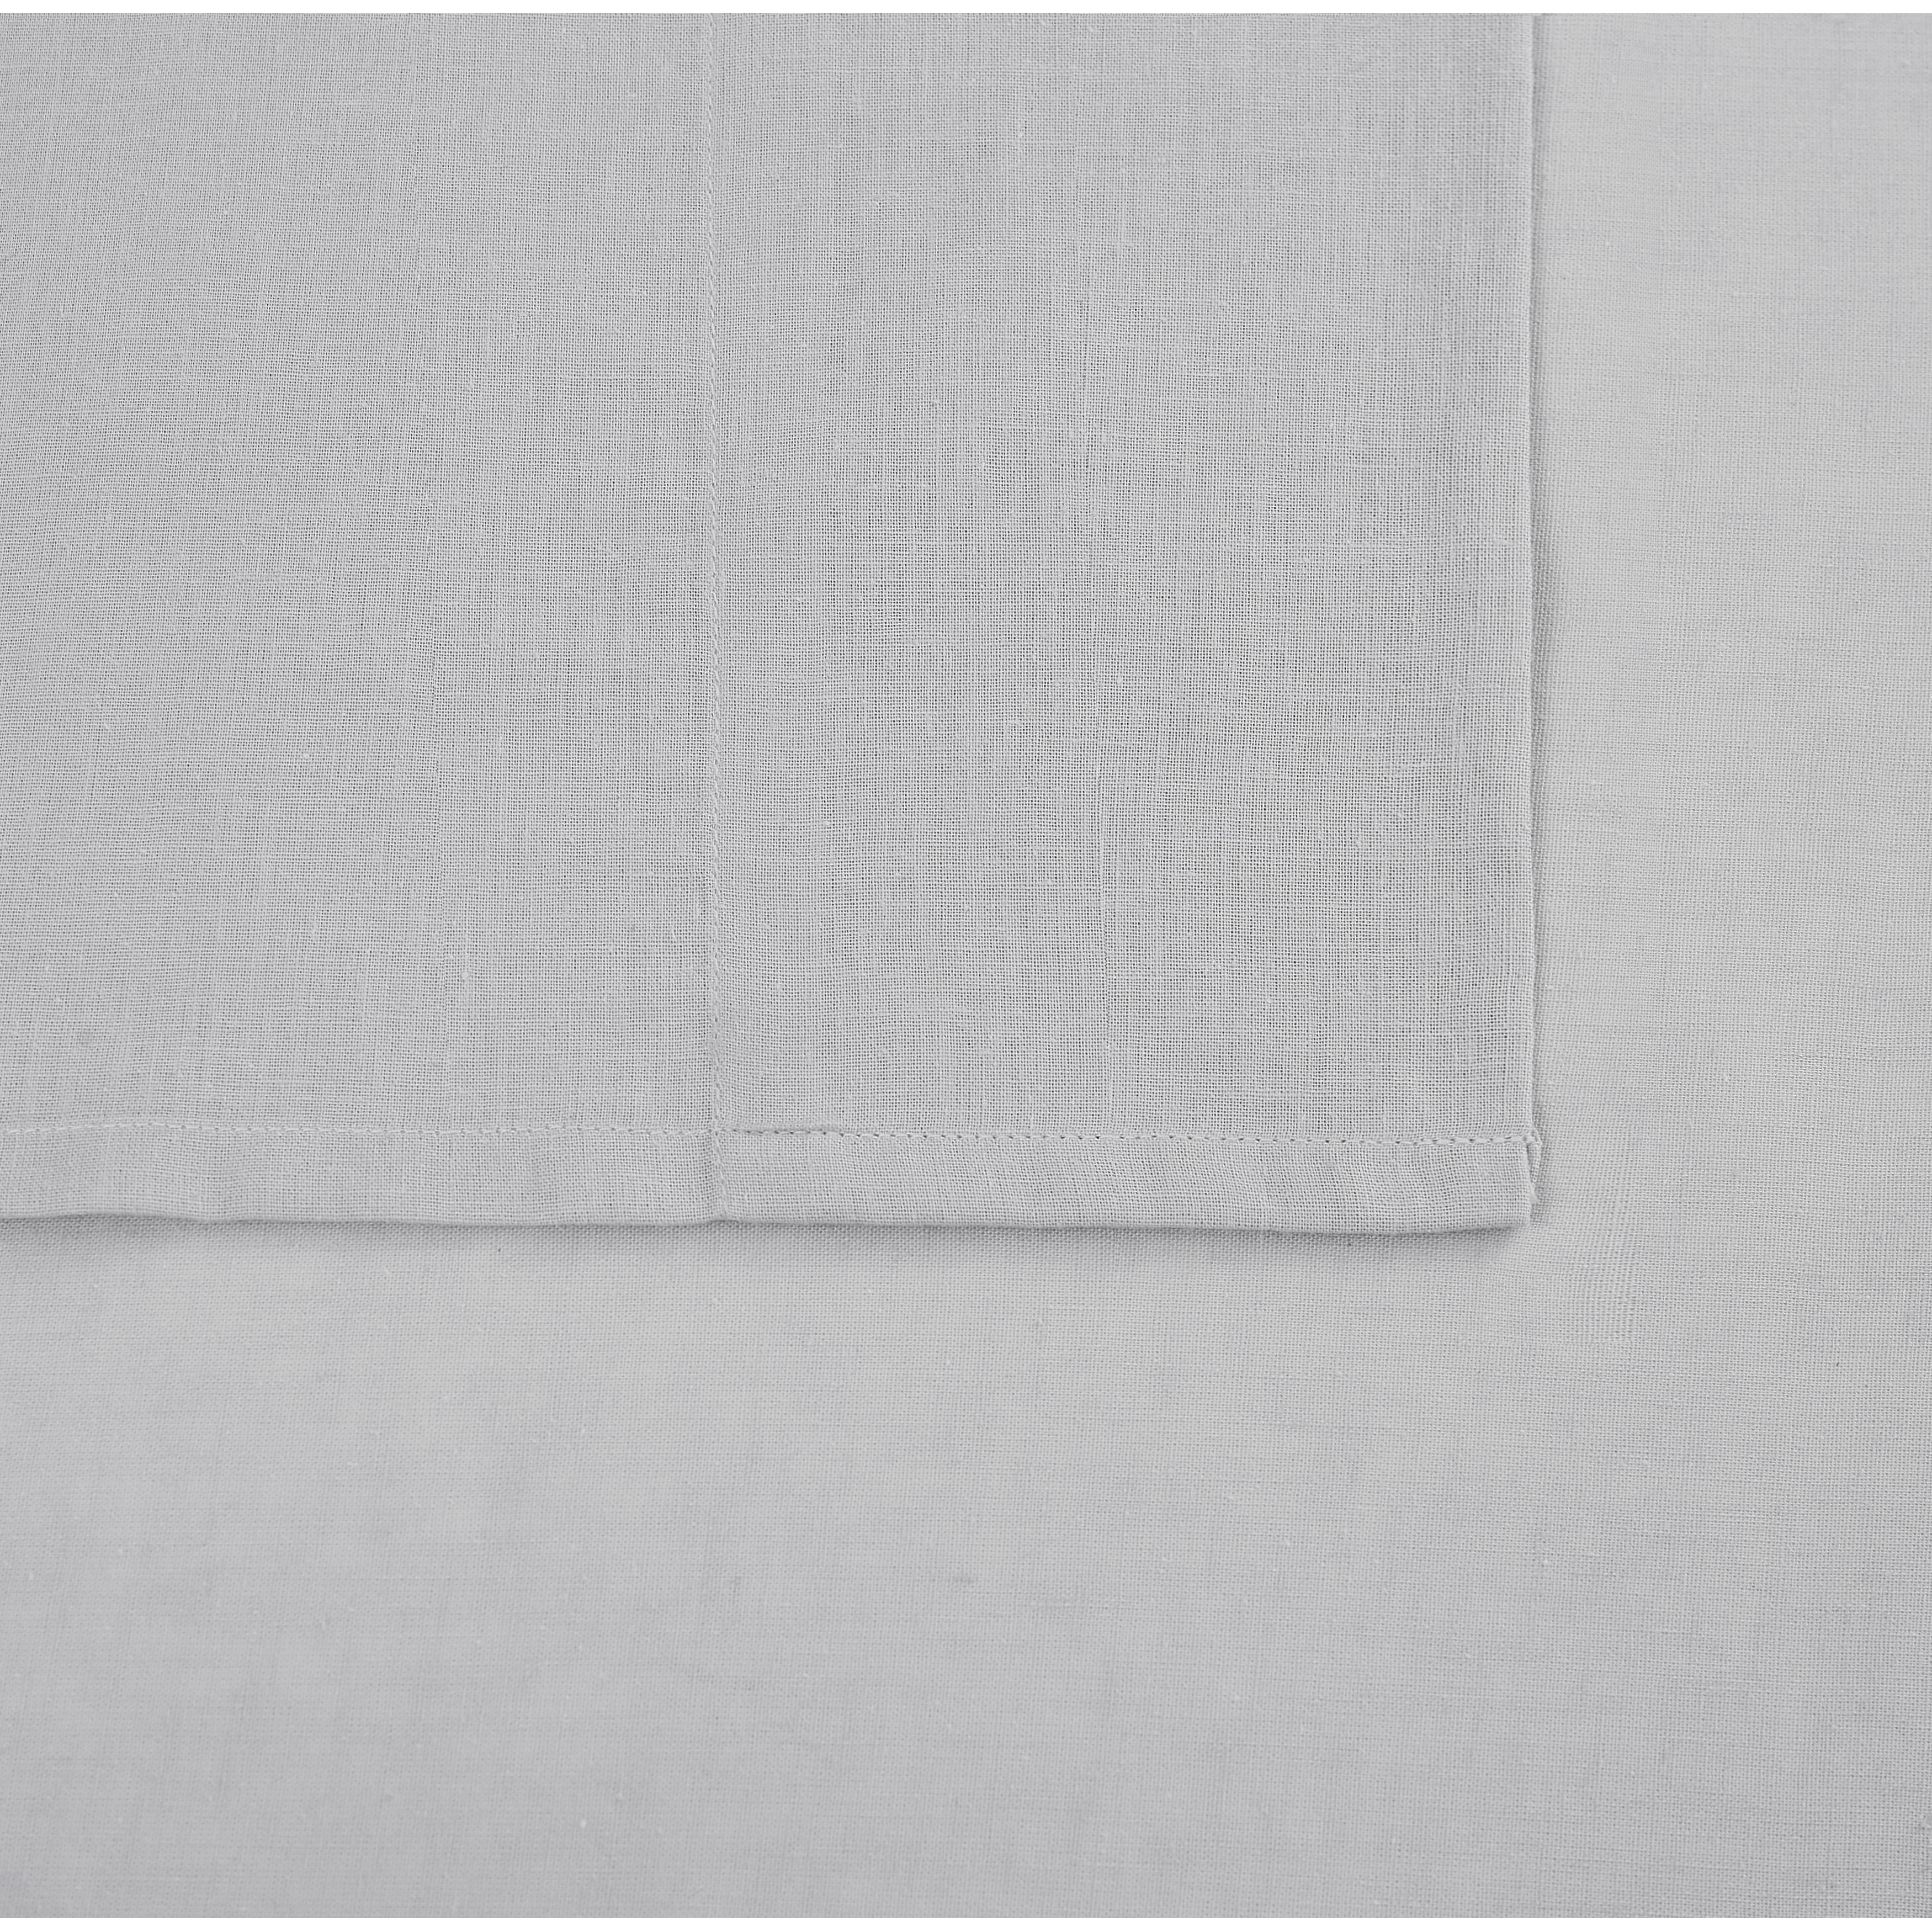 FRYE Cotton Linen Blend Sheet Set & Reviews